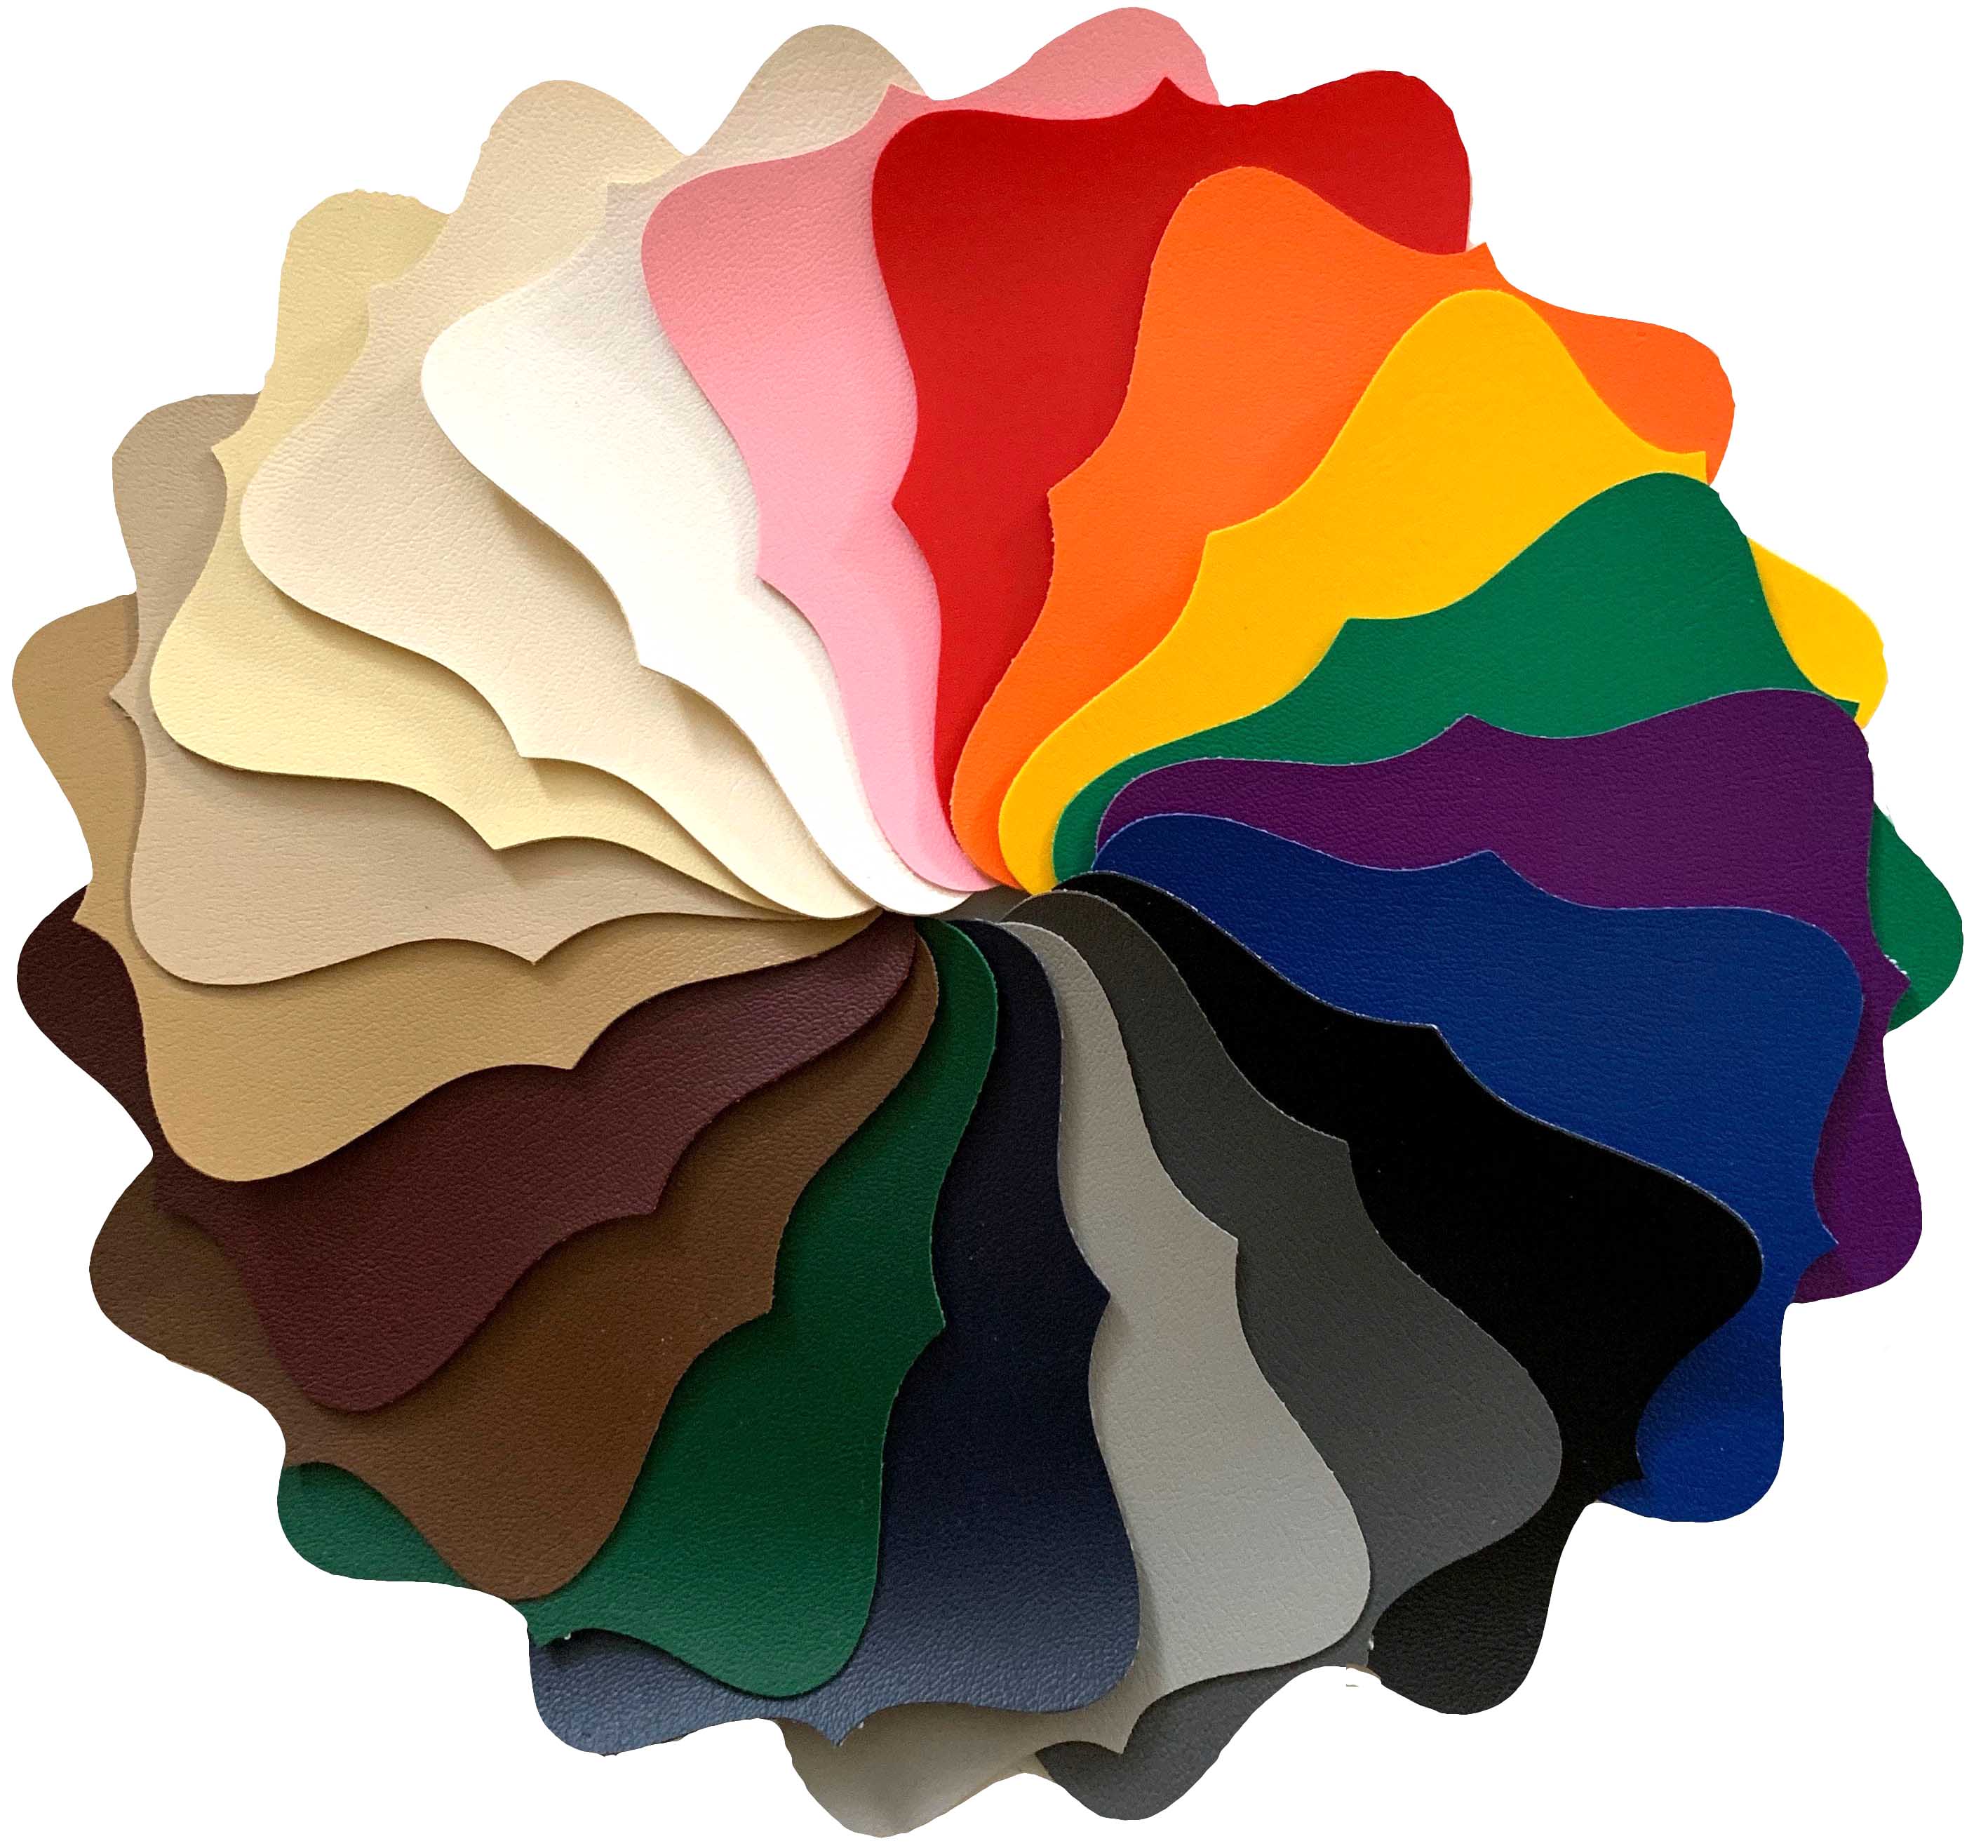 Vinyl fabric colors